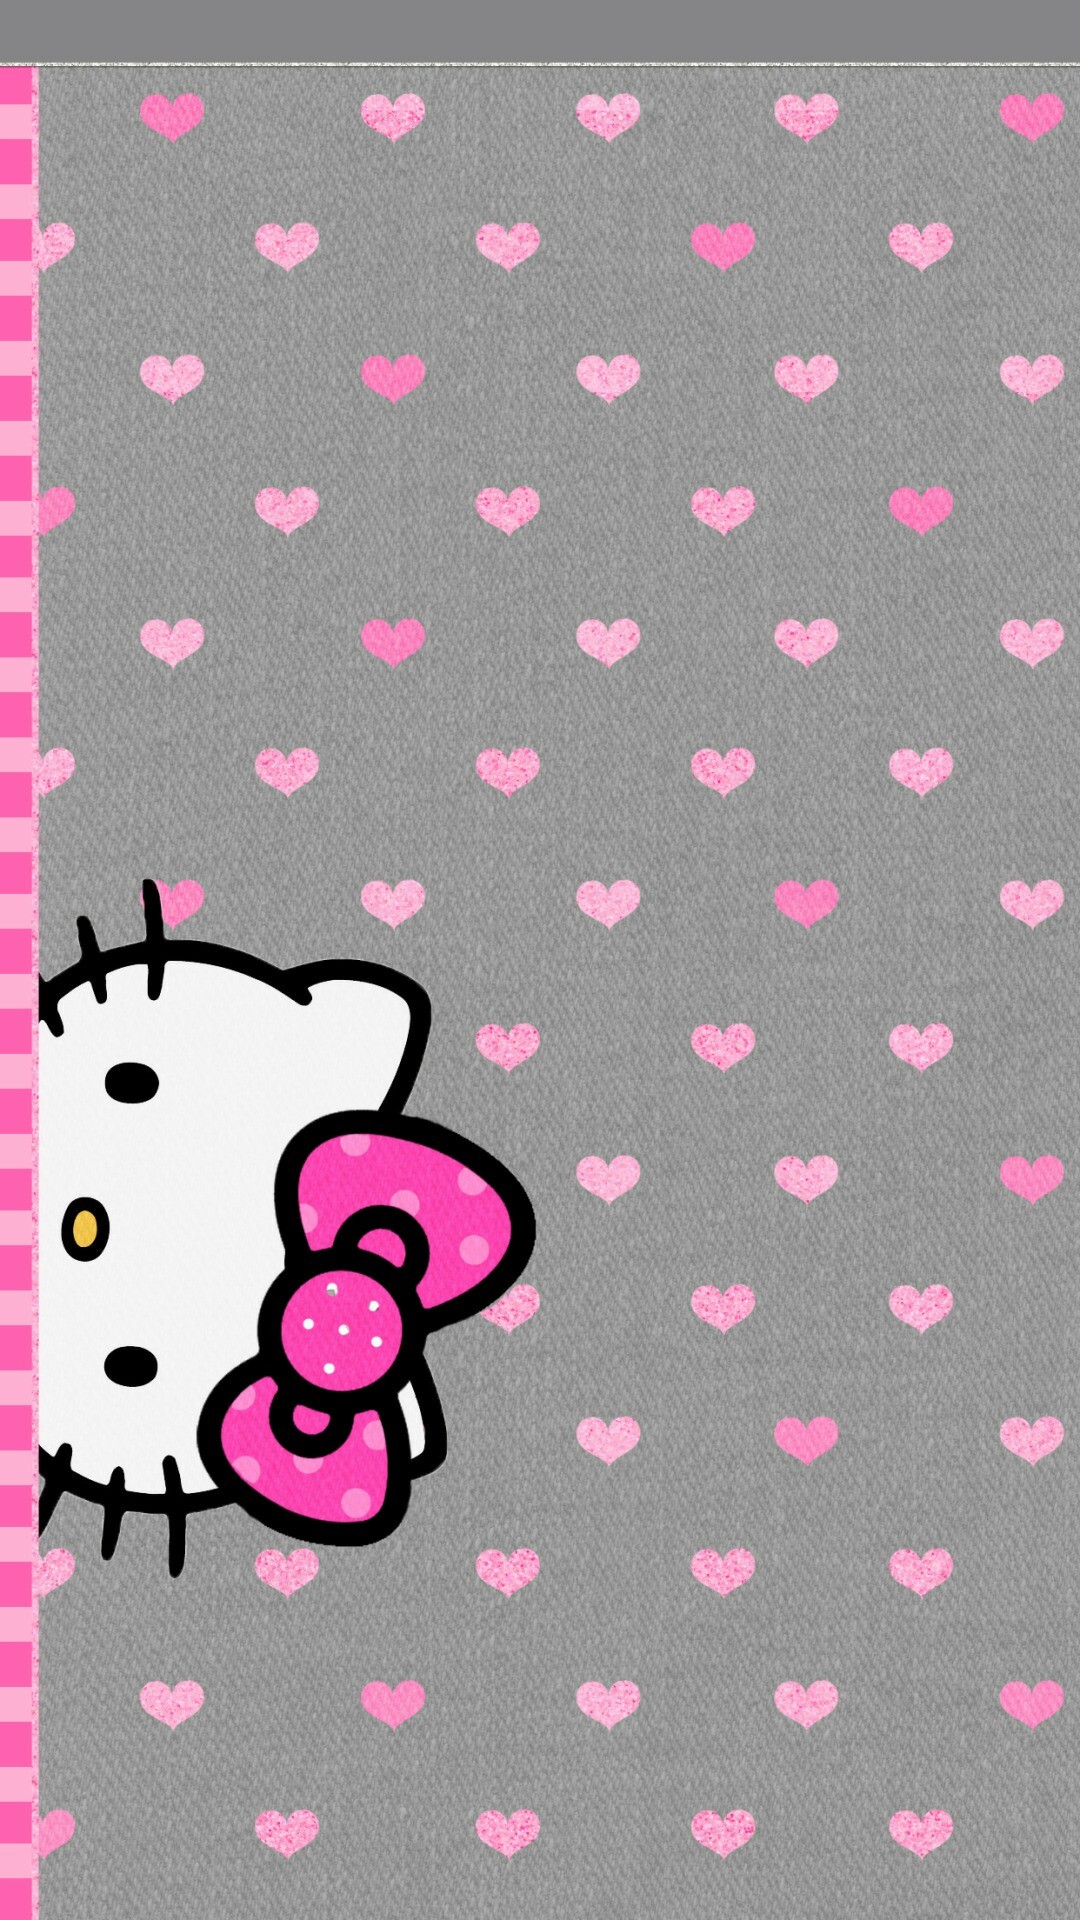  Hello  Kitty  Black  and Pink  Wallpaper    WallpaperTag